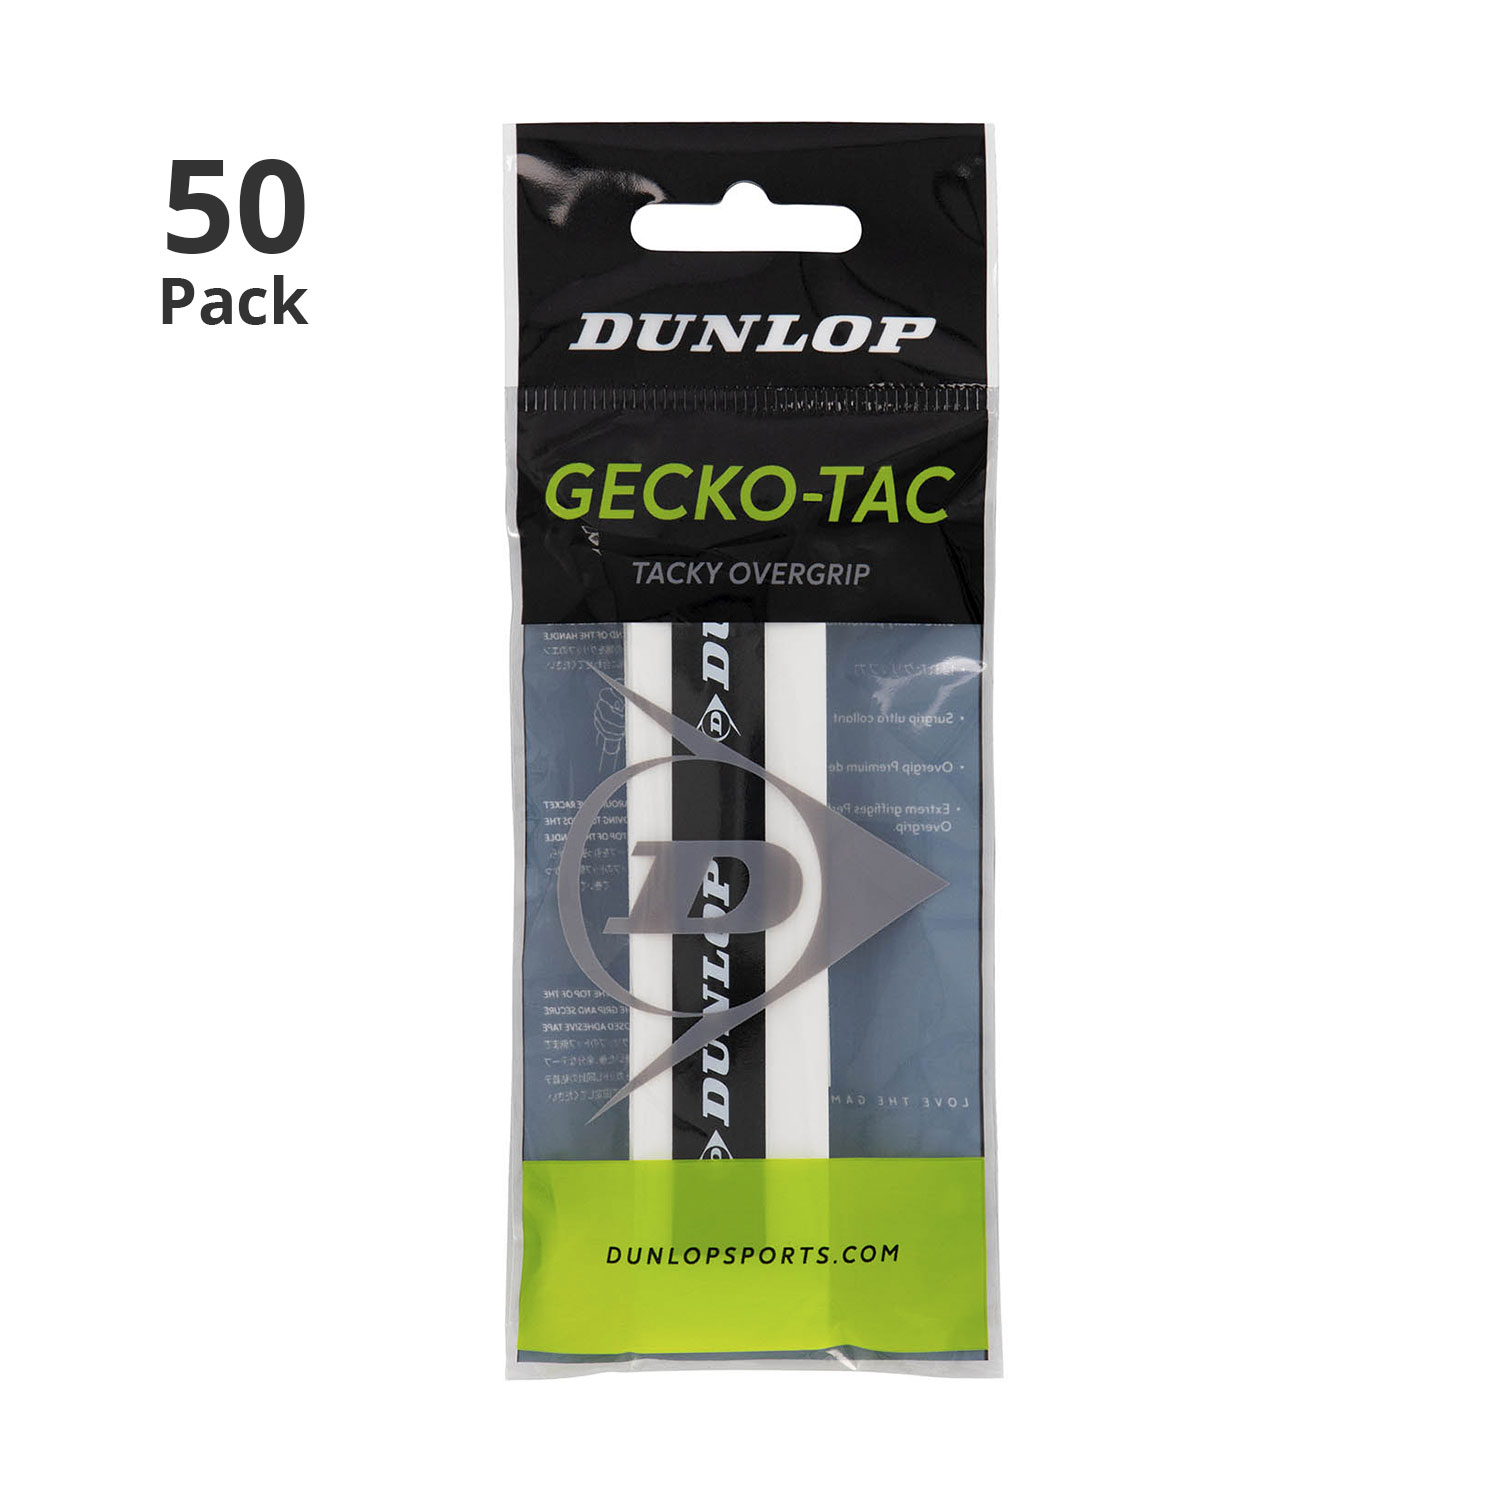 Dunlop Gecko-Tac Overgrip x 50 Pack- White